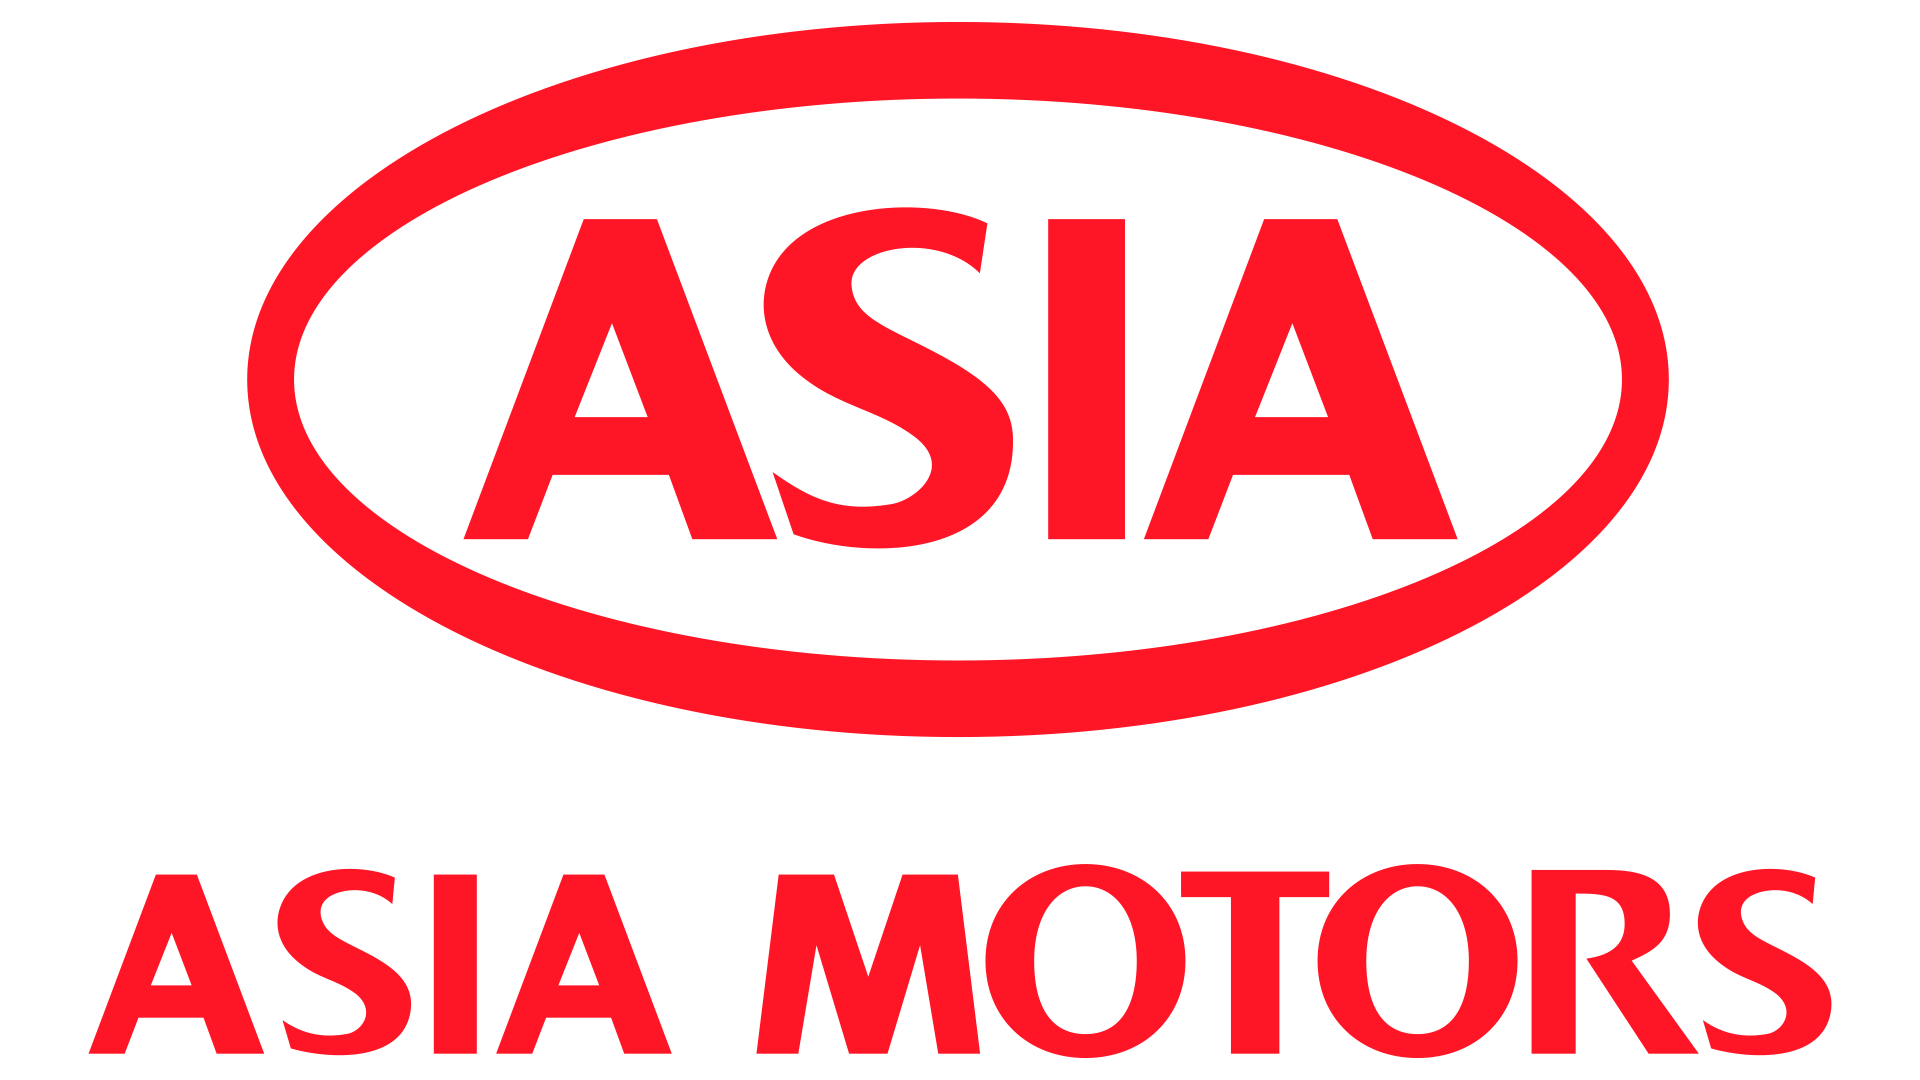 Asia ge. Азия Моторс. Киа Моторс логотип. Asia логотип. Логотипы азиатских автомобилей.